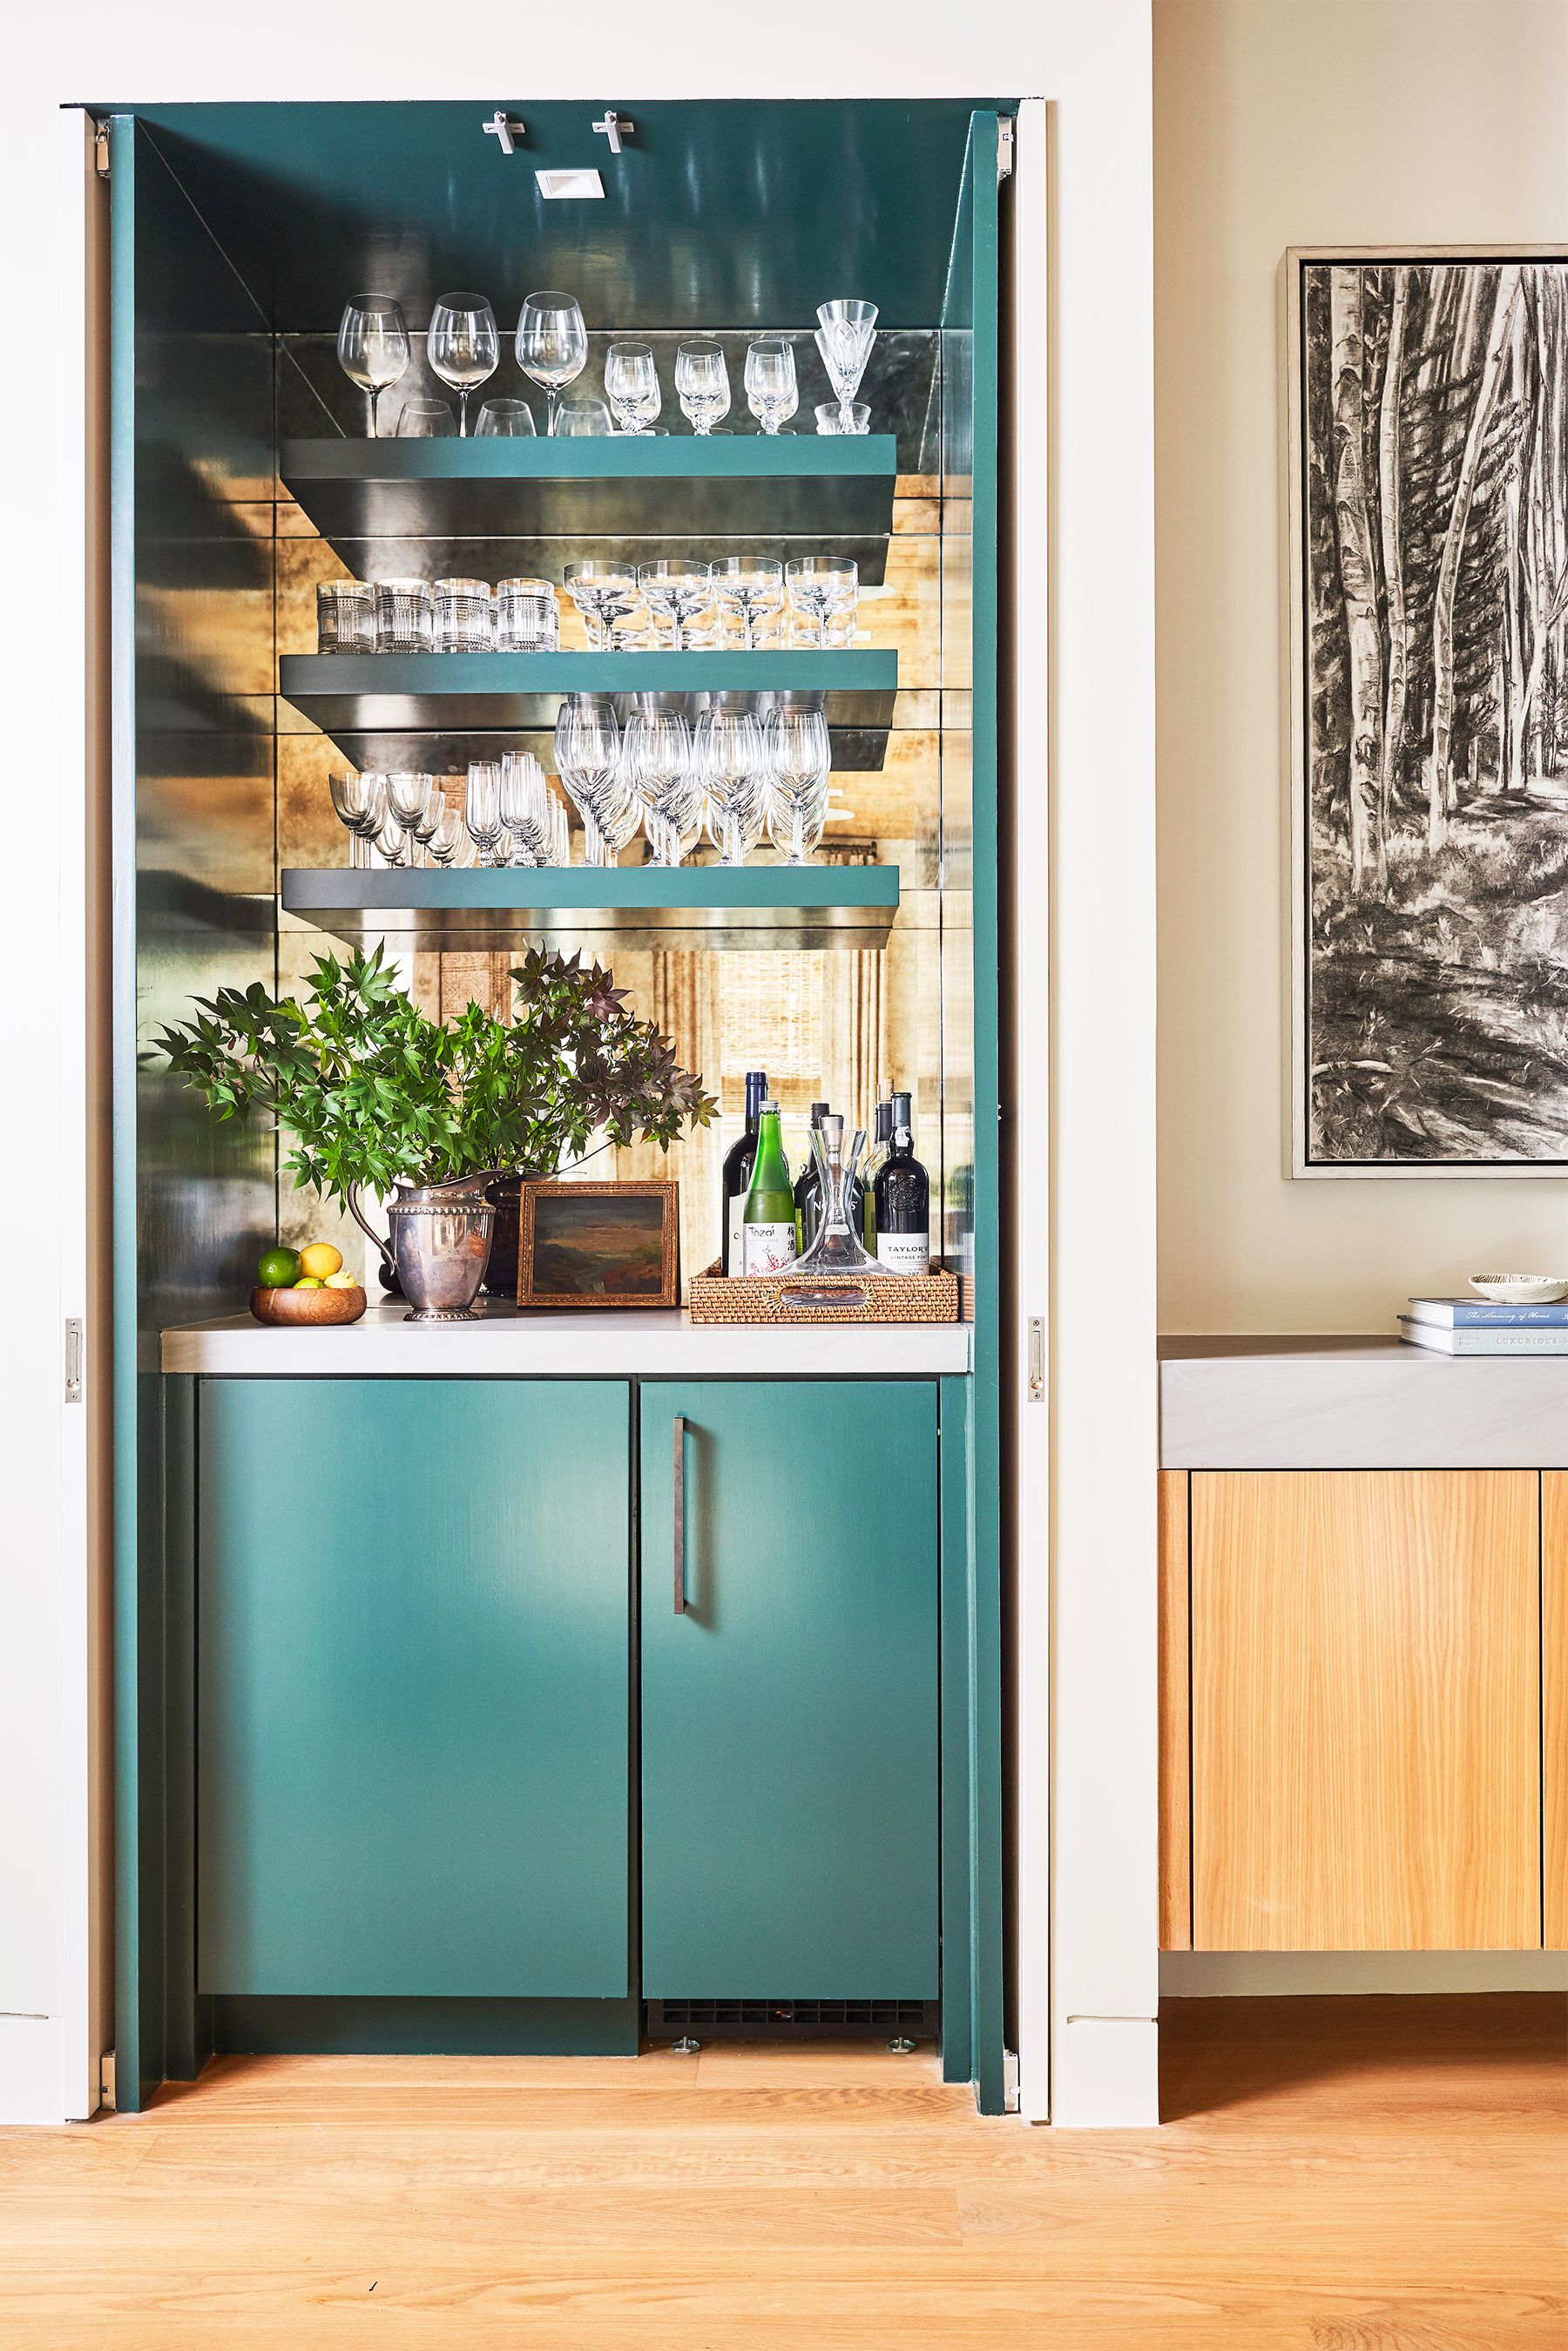 18 Best Home Bar Ideas   Cool Home Bar Designs, Furniture, and Decor